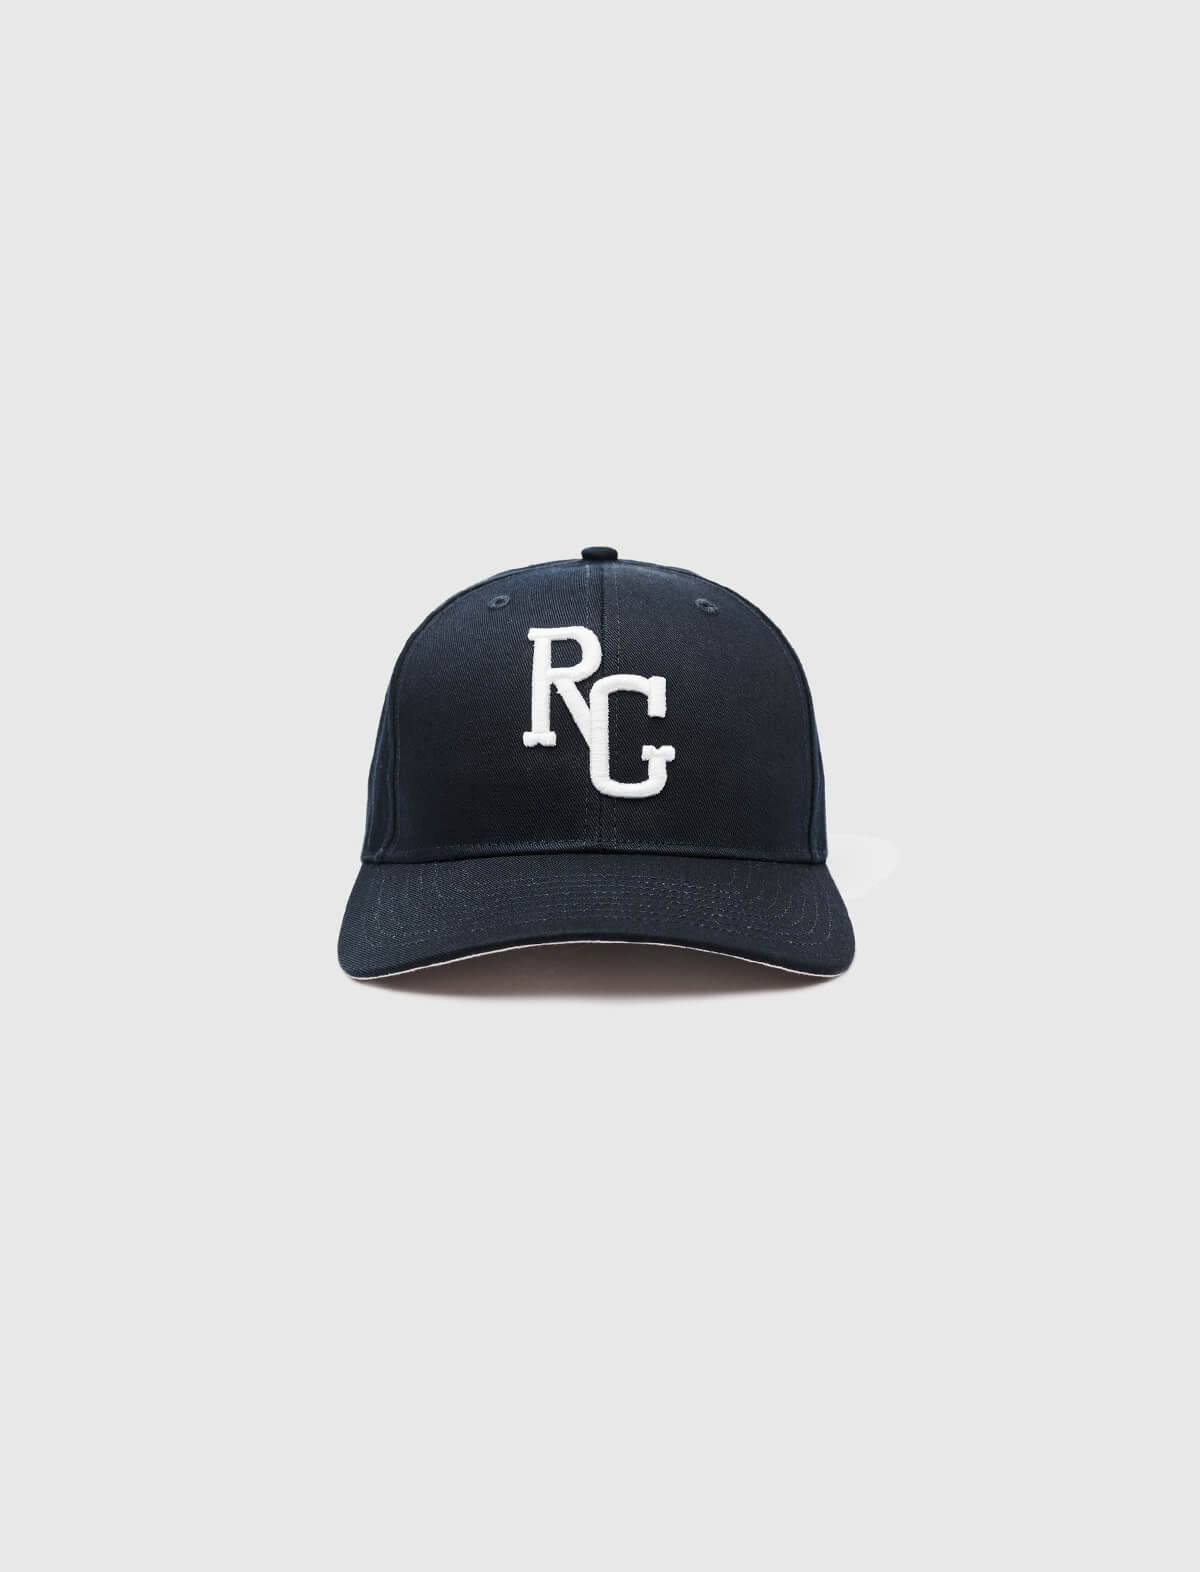 RADDA GOLF RG Hat in Navy